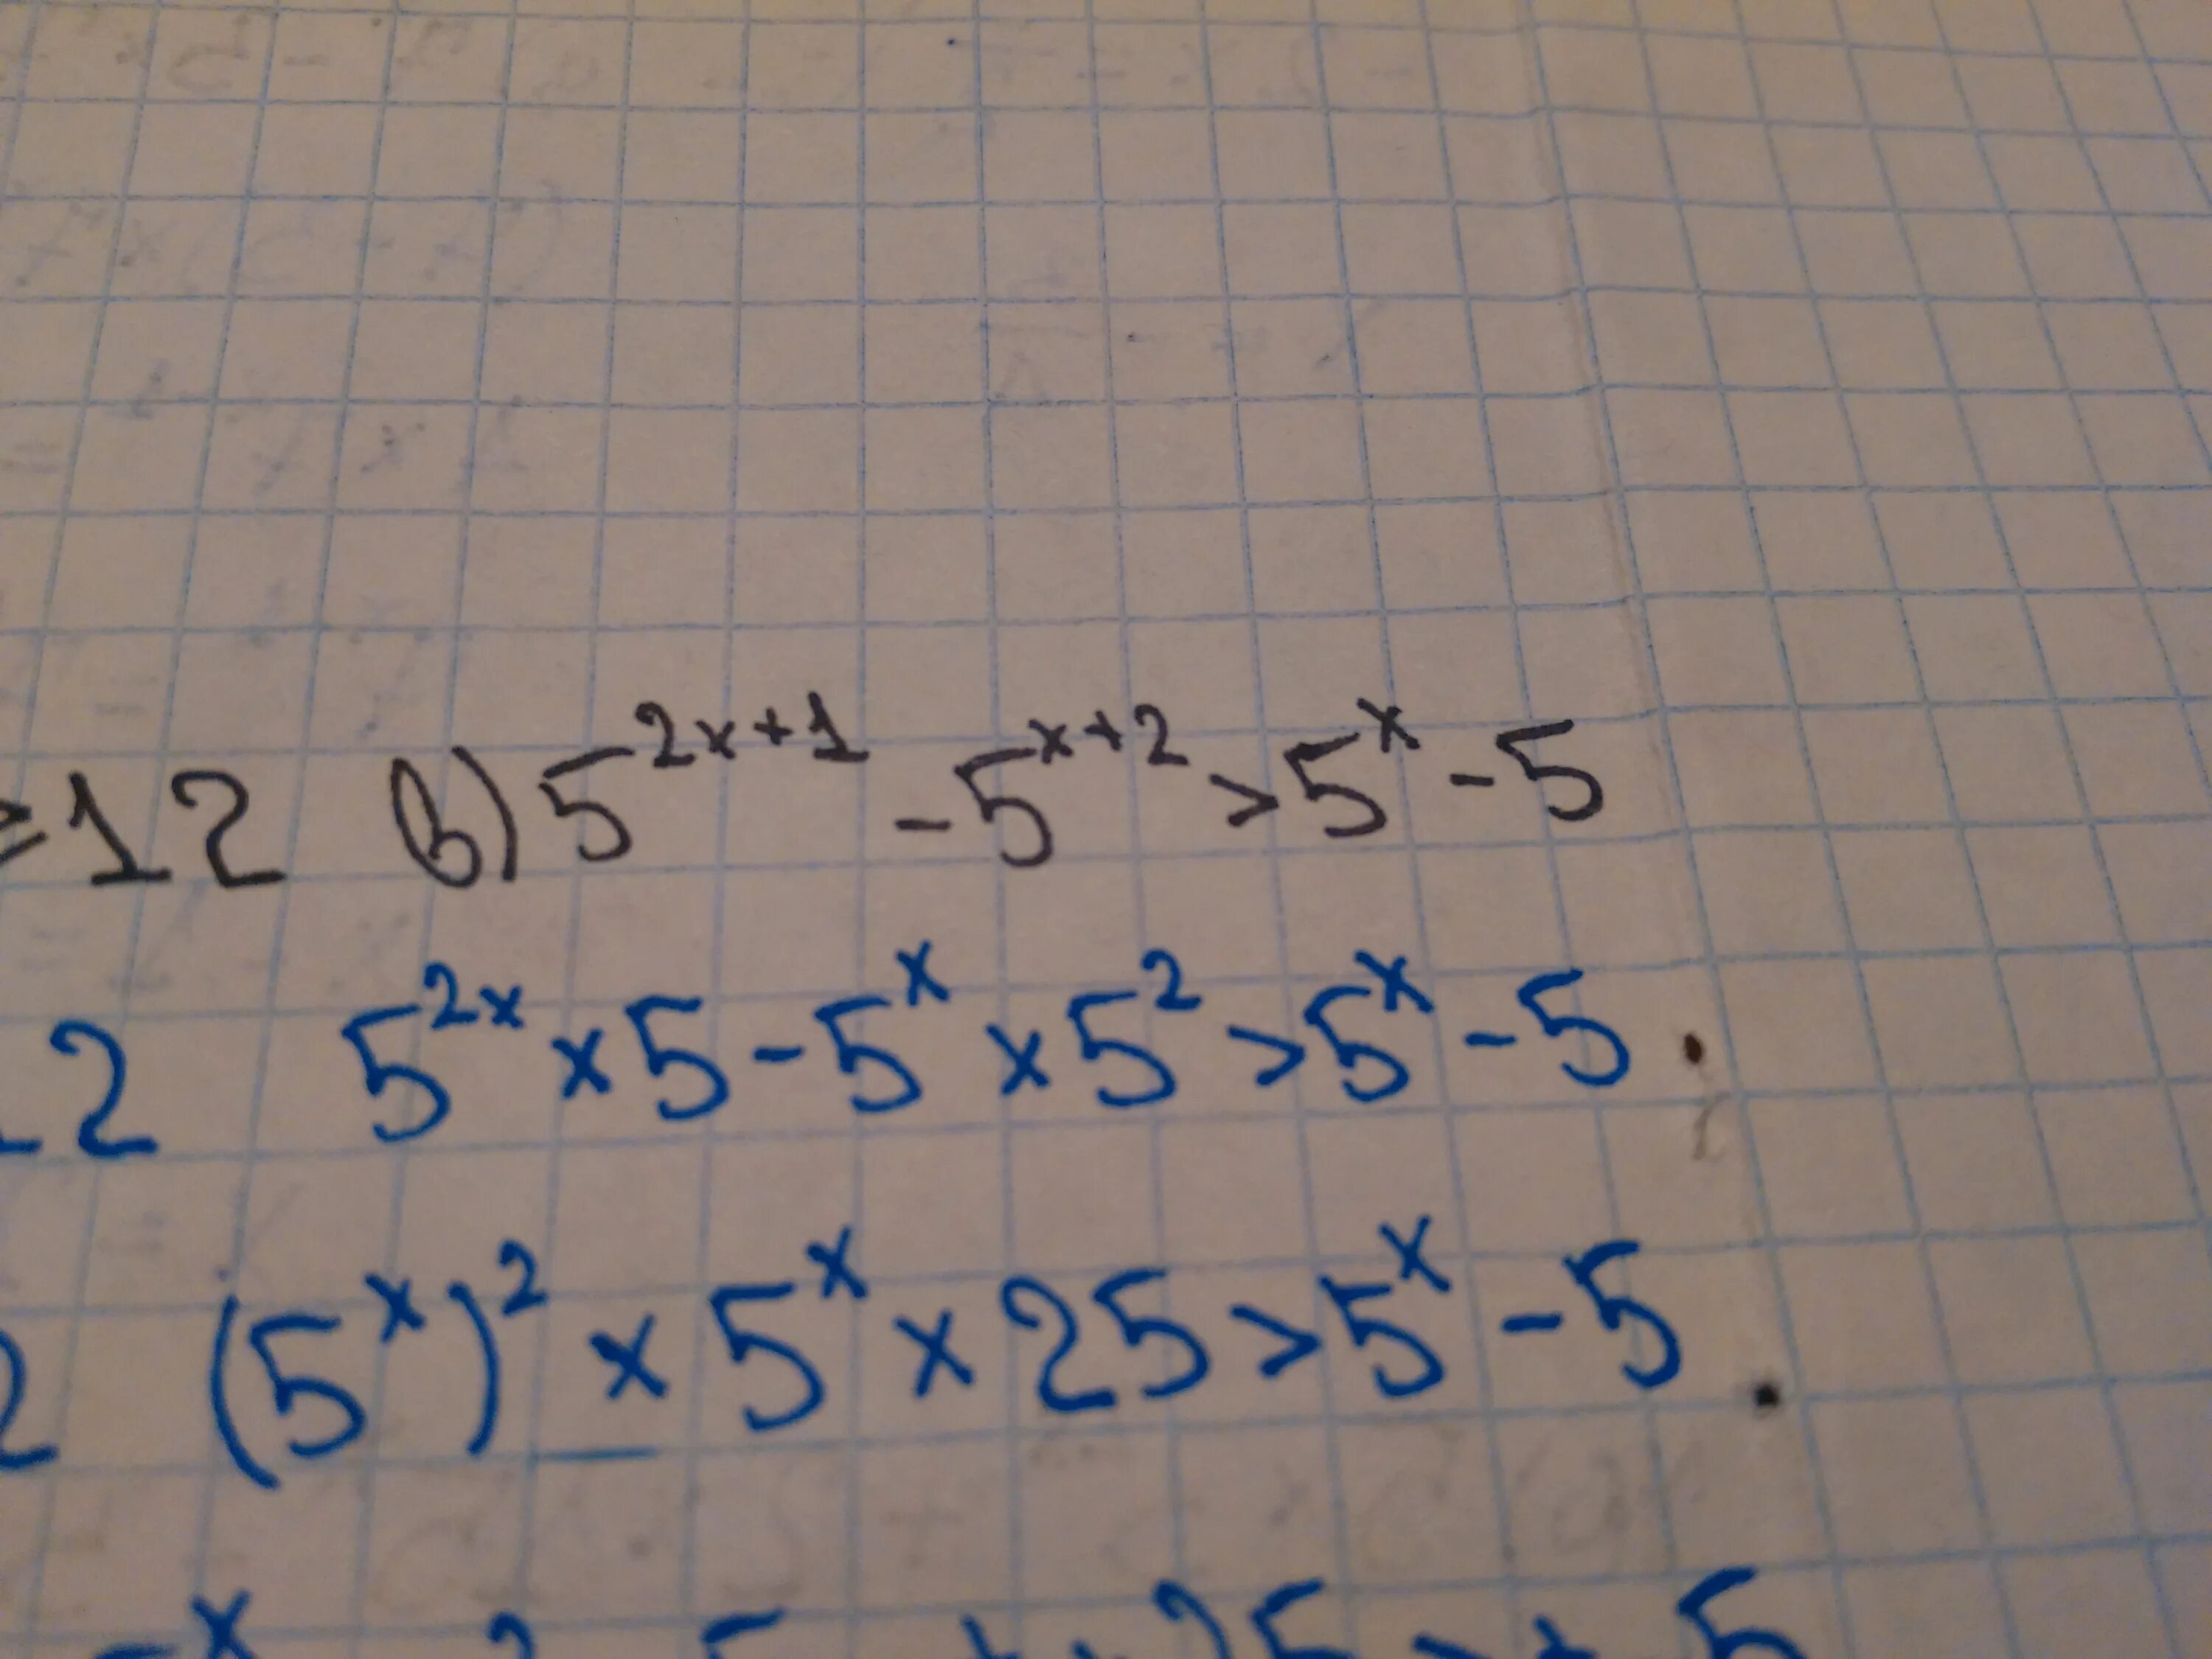 10 3x 15 5 5 8x. 5x 2 −x/ + 1/2x= − x/5. (X-5)^2. 5x-2=1. -2,5x-1,5x.